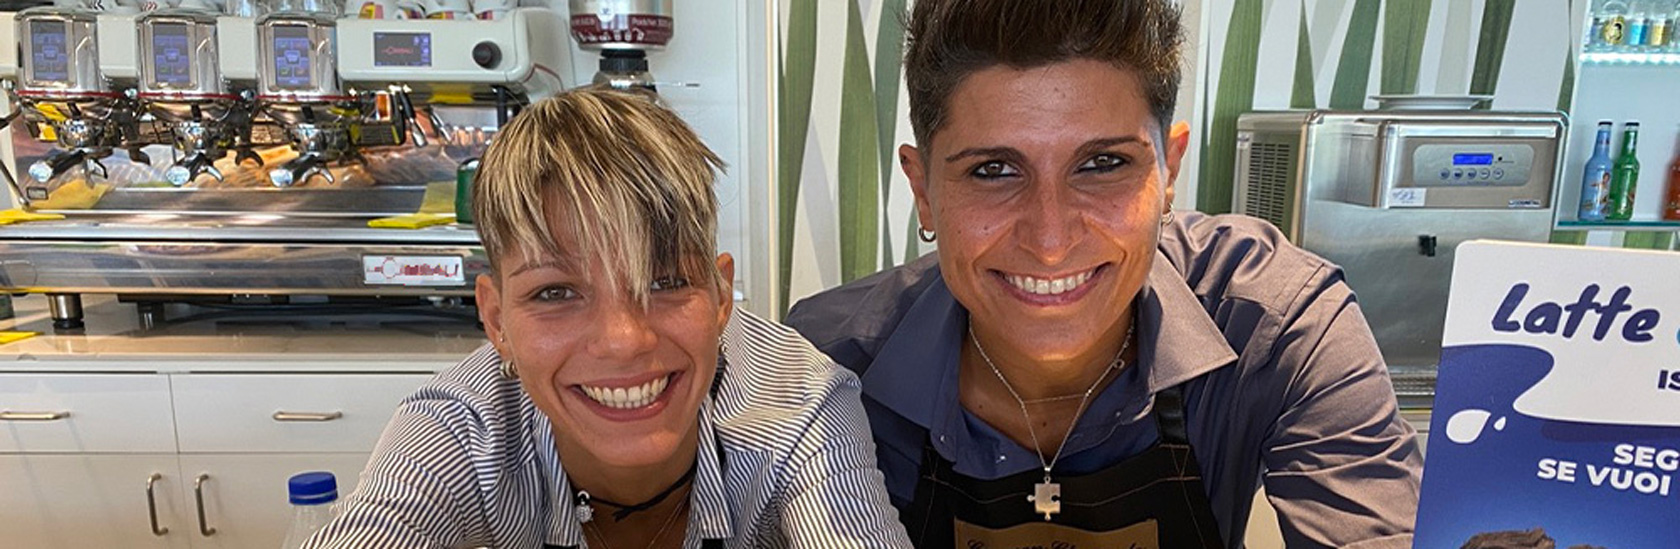 La Centrale con Manuela Fensore e Carmen Clemente per il Latte Art Tour